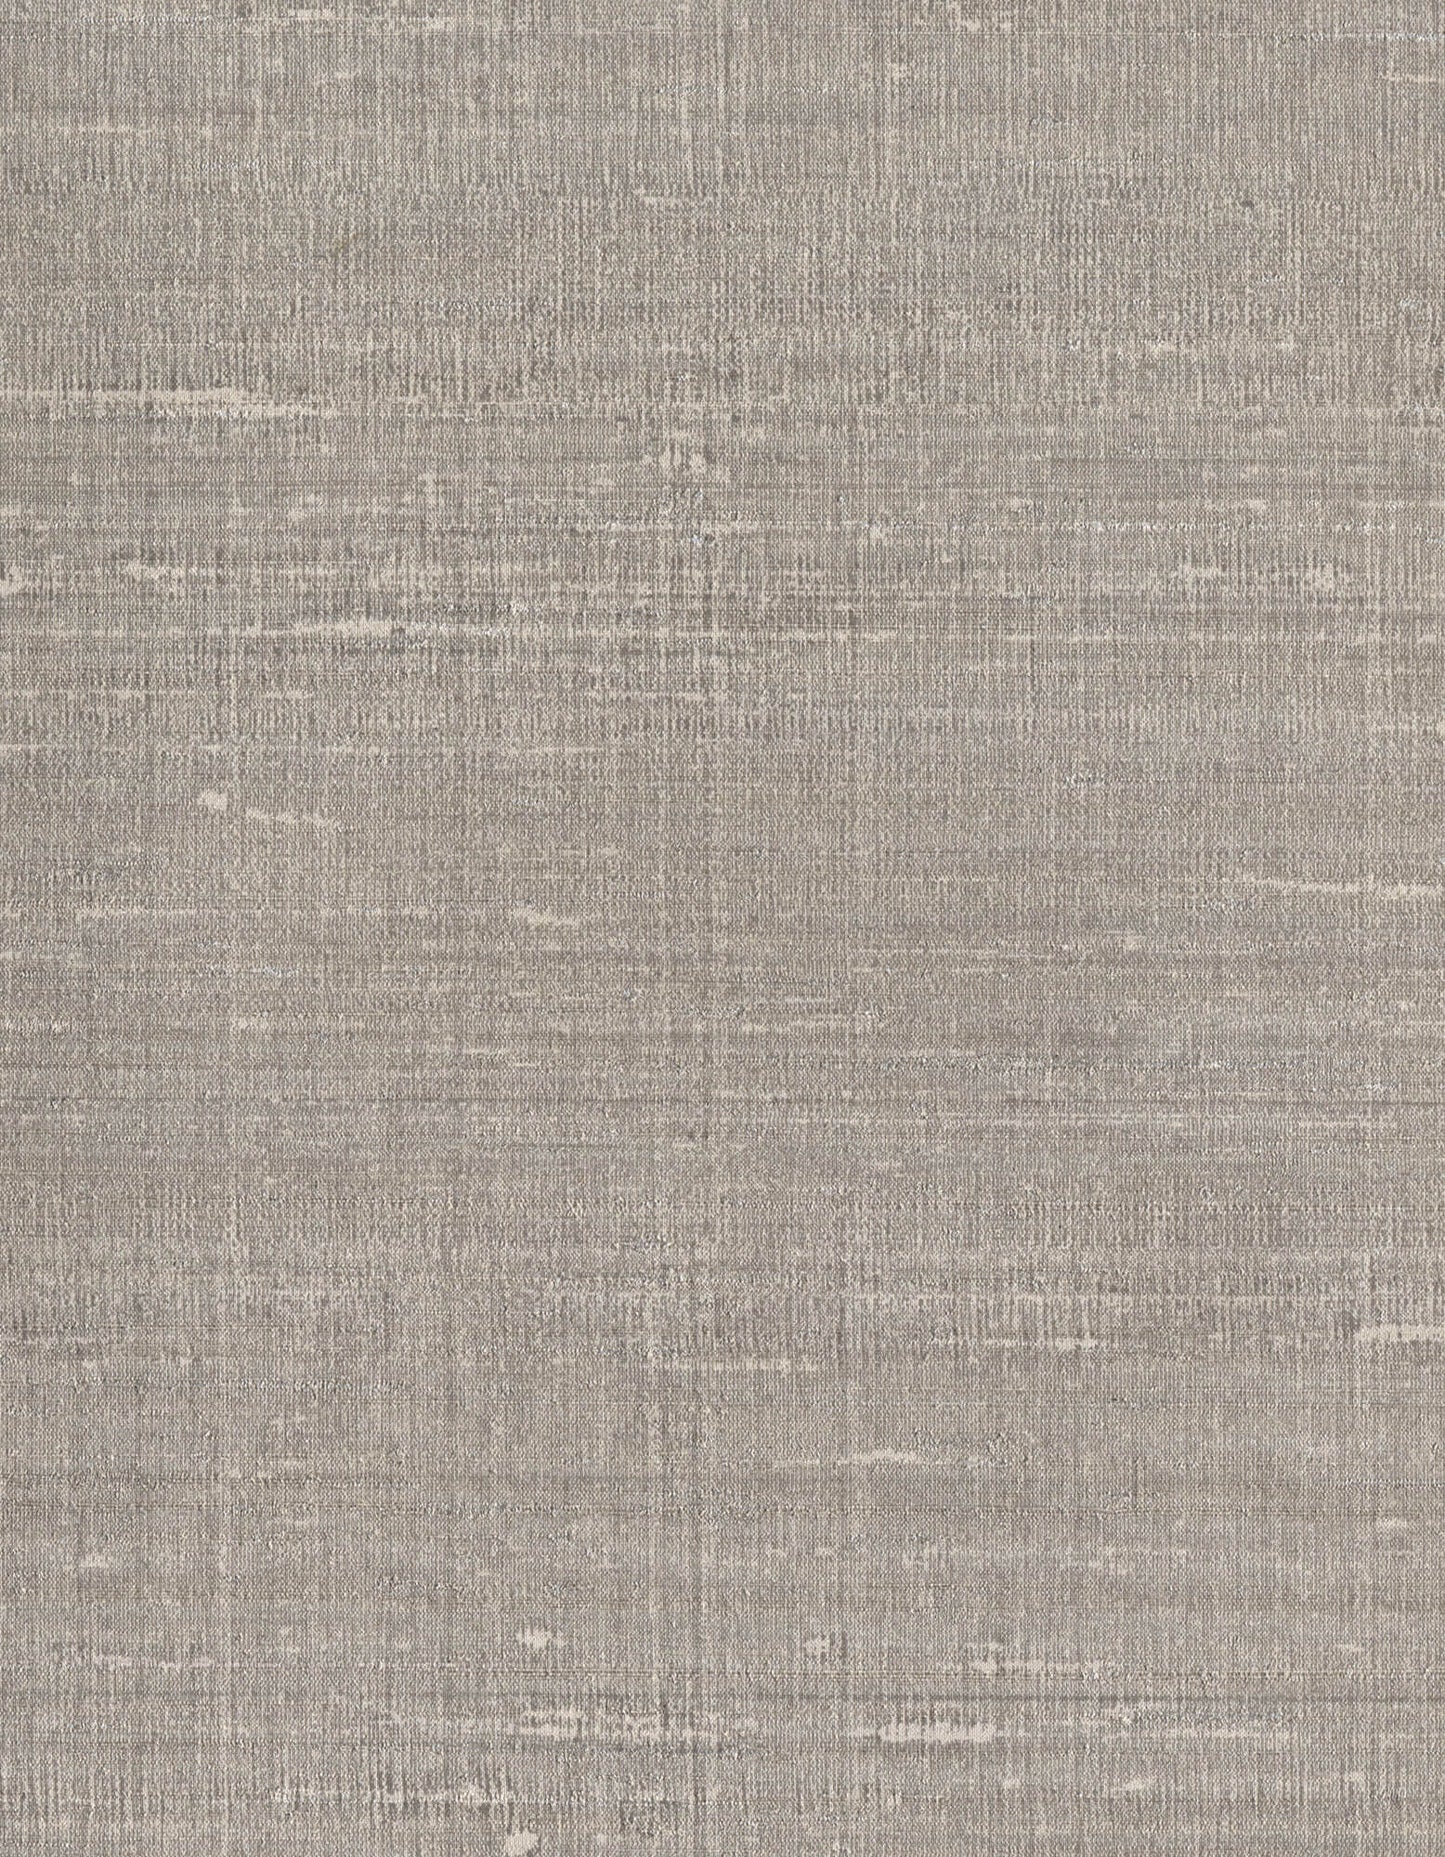 Candice Olson Moonstruck Meditate Wallpaper - Charcoal Gray